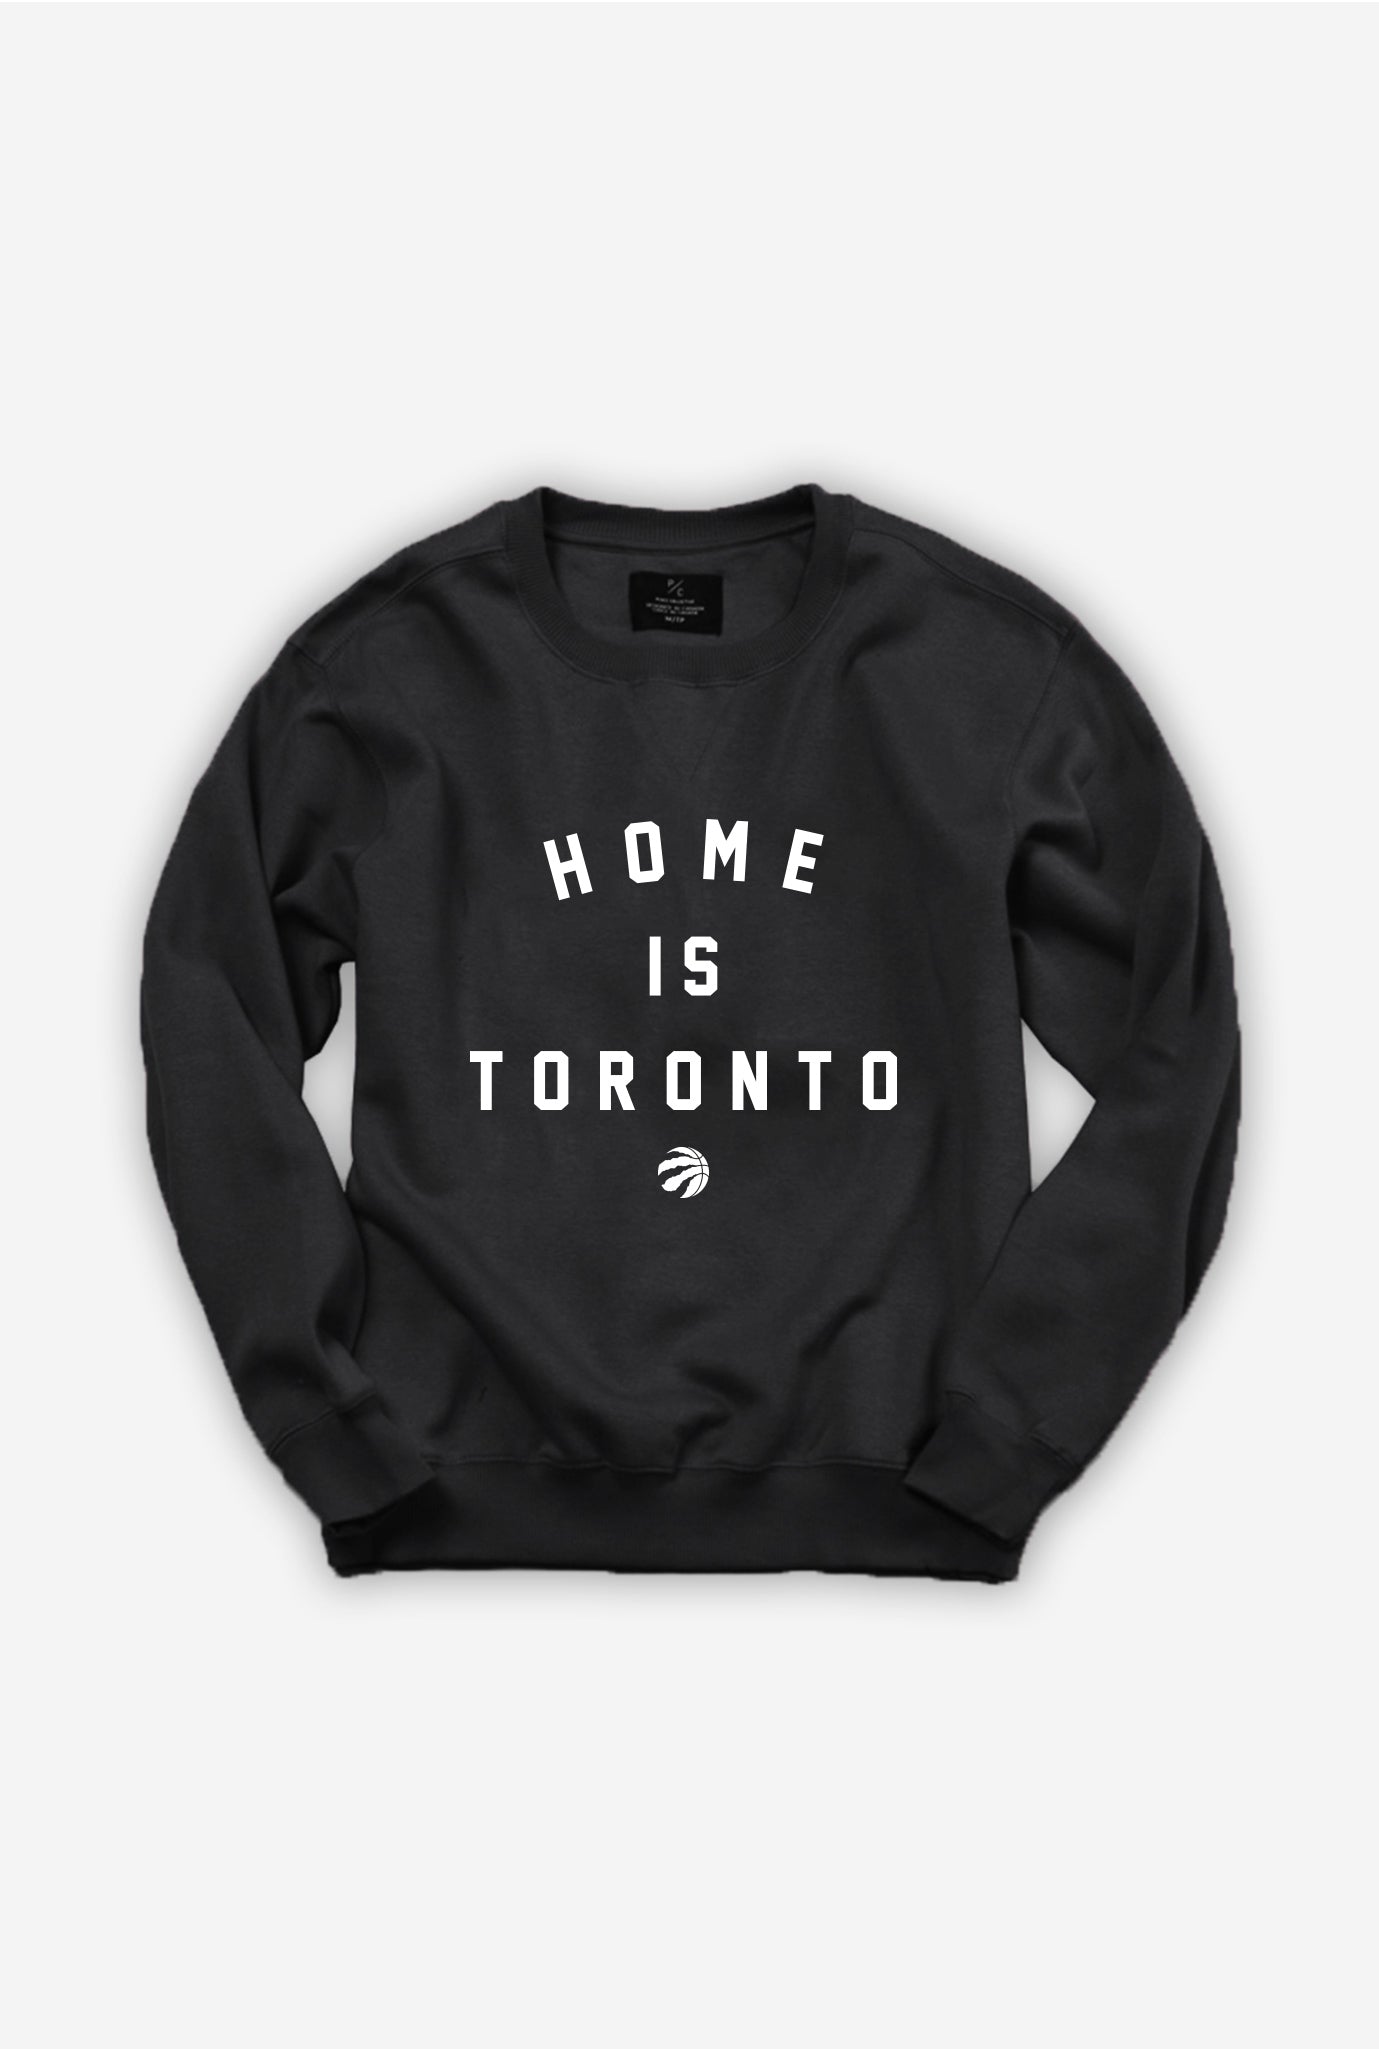 Home is Toronto Raptors Ball Crewneck - Black